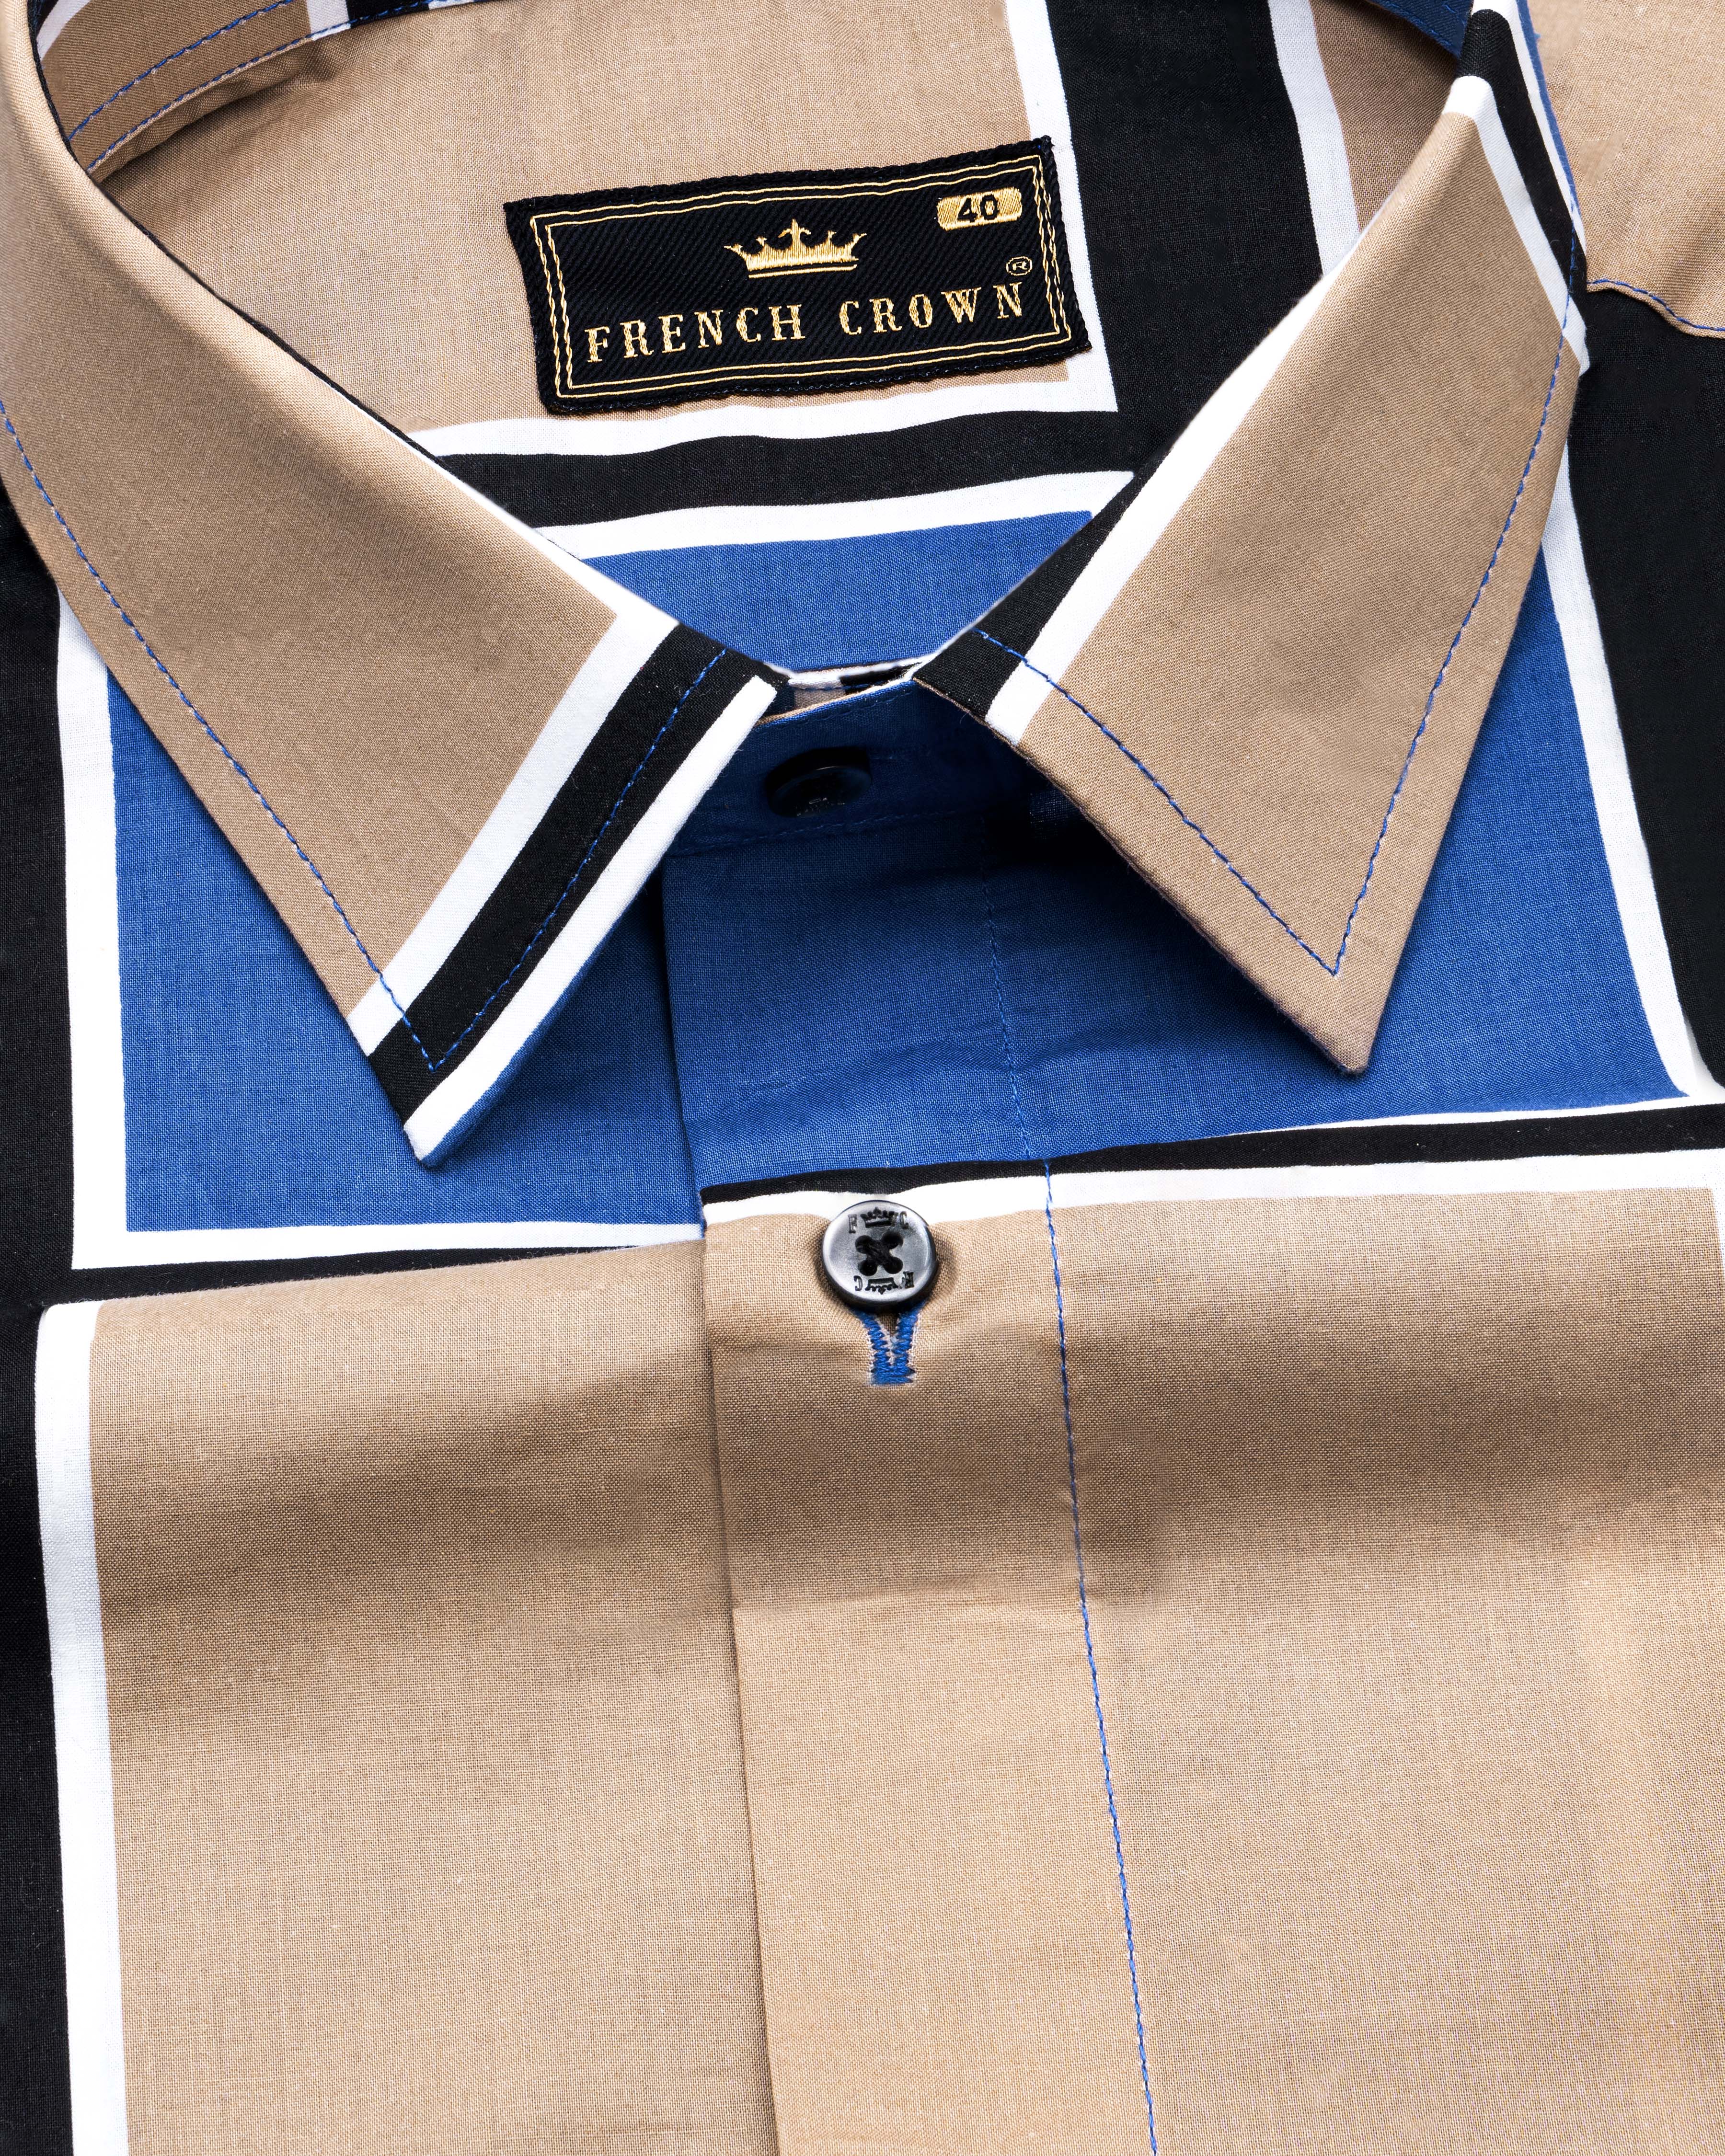 Sandrift Brown with Cobalt Blue and Black Lines Printed Premium Cotton Shirt  8625-BLK-38,8625-BLK-H-38,8625-BLK-39,8625-BLK-H-39,8625-BLK-40,8625-BLK-H-40,8625-BLK-42,8625-BLK-H-42,8625-BLK-44,8625-BLK-H-44,8625-BLK-46,8625-BLK-H-46,8625-BLK-48,8625-BLK-H-48,8625-BLK-50,8625-BLK-H-50,8625-BLK-52,8625-BLK-H-52